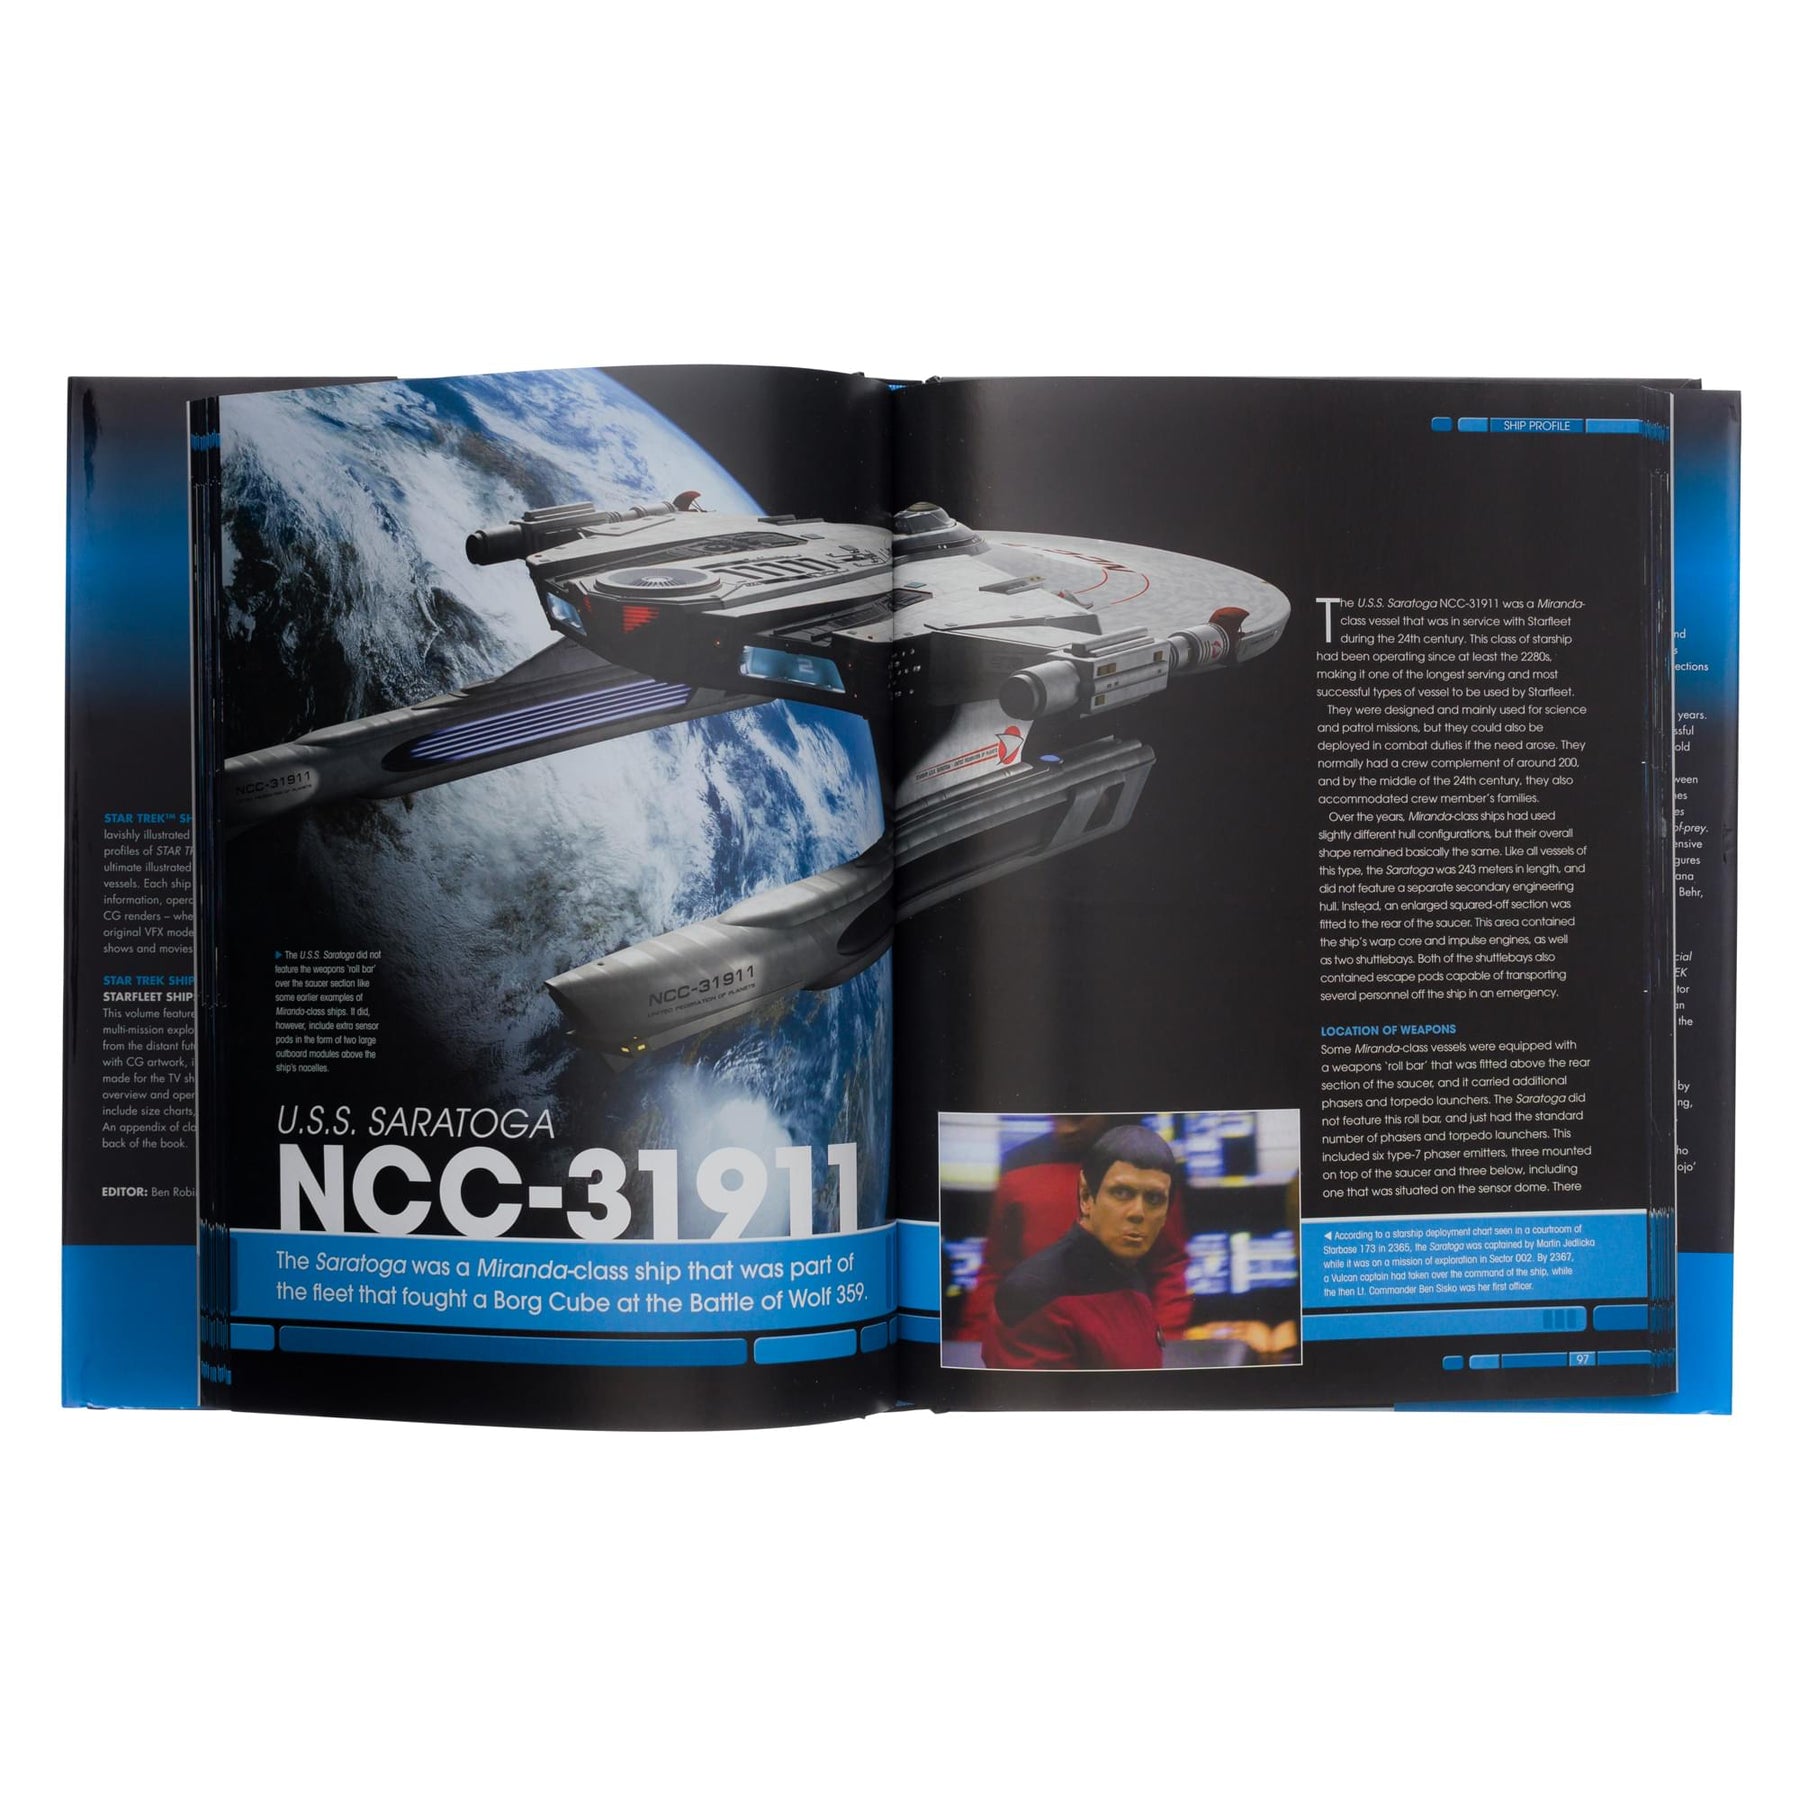 Star Trek Shipyards Book | Starfleet Ships 2294 - Future Vol 2